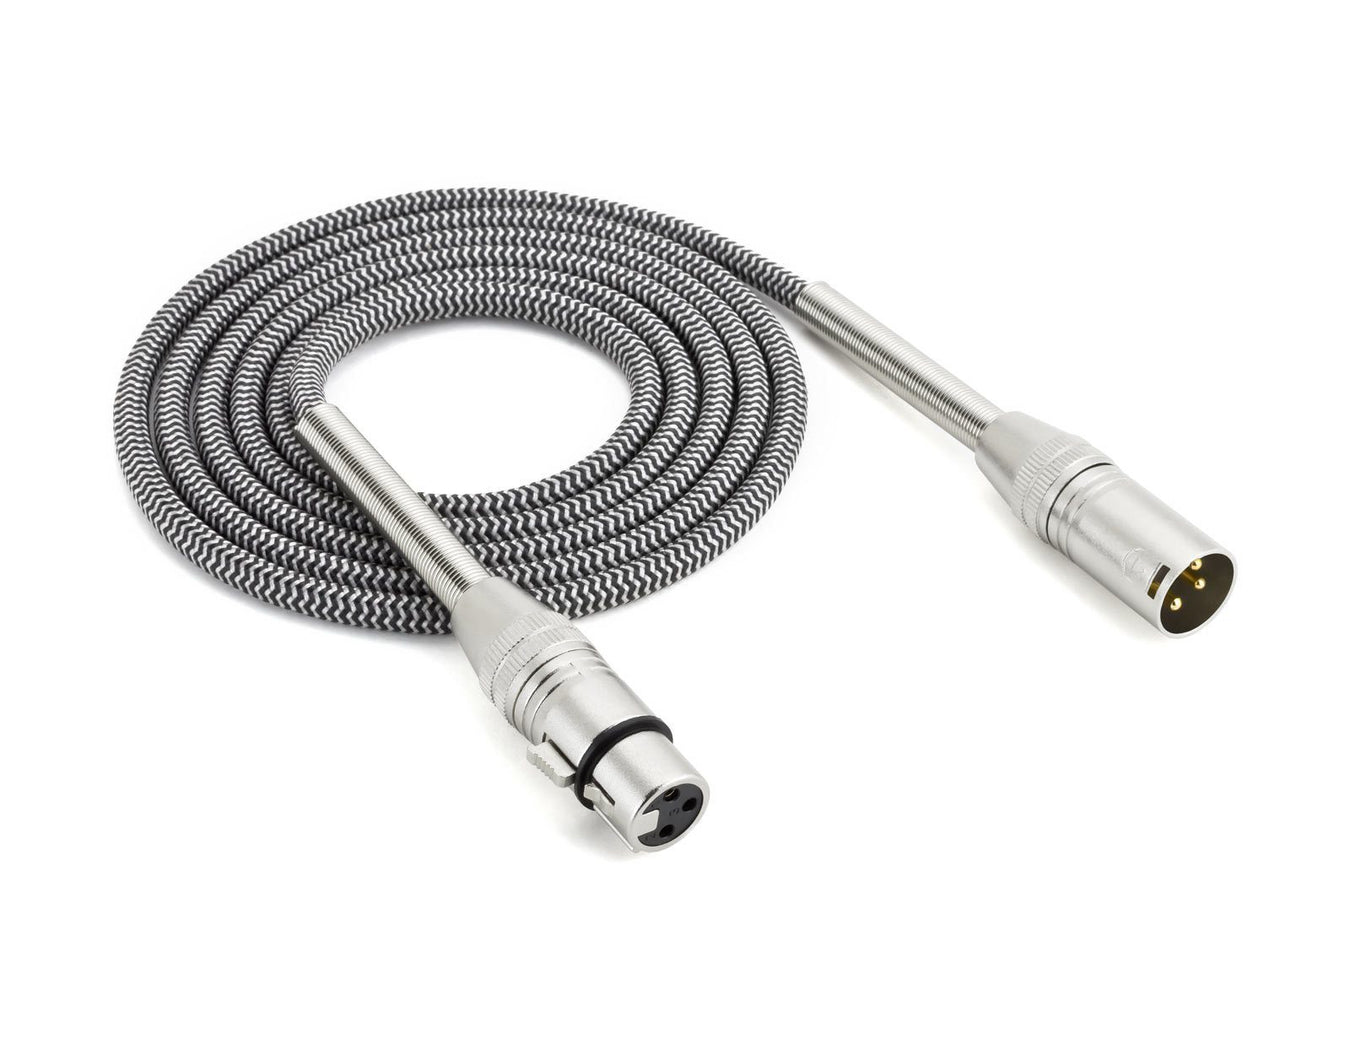 XLR Cables, XLR Connectors and Bulk XLR Cable